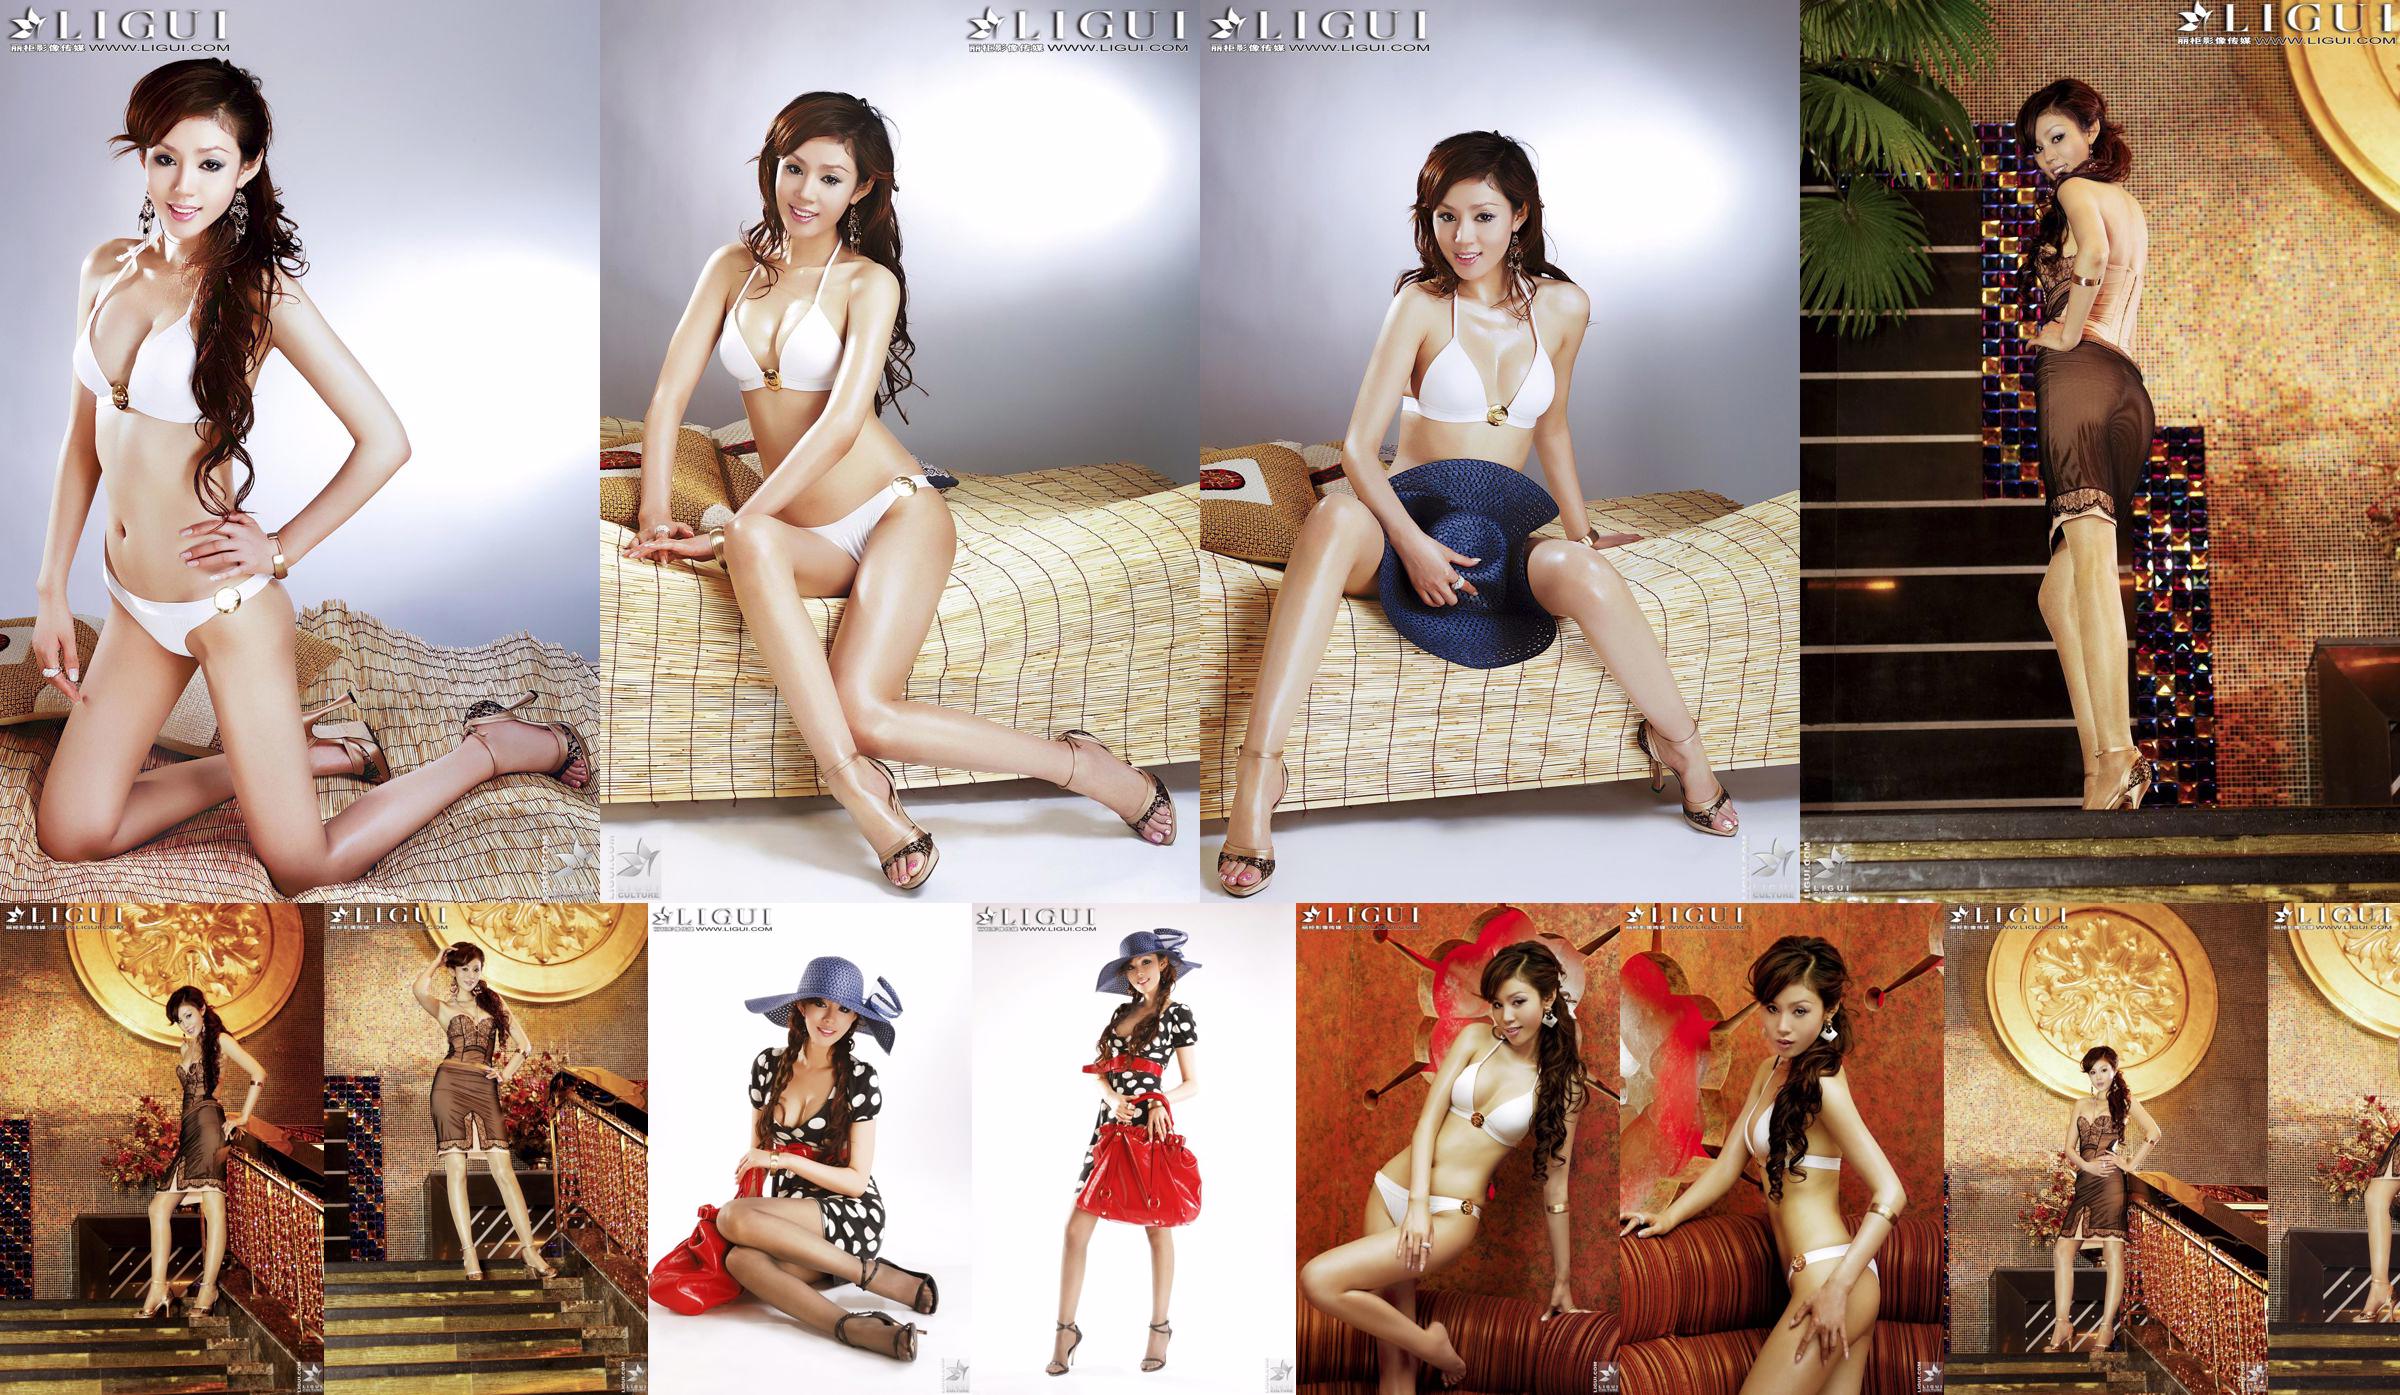 [丽 柜 LiGui] Model Yao Jinjin's "Bikini + Jurk" Mooie benen en zijdeachtige voeten Foto Foto No.c1e9bf Pagina 5